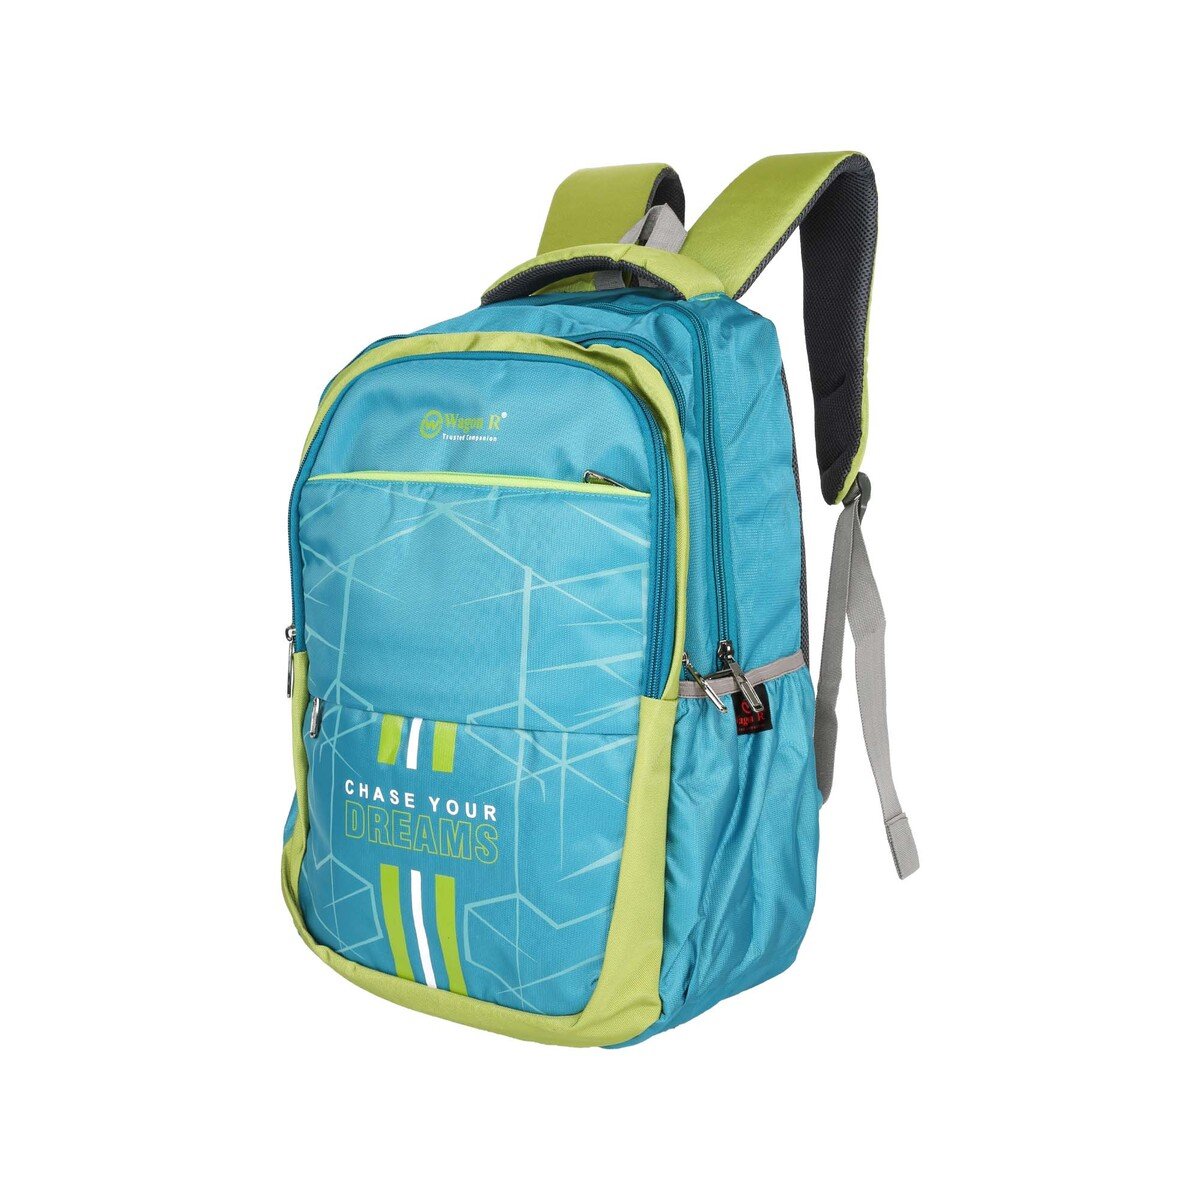 Wagon-R Oxford Backpack 1275 19 Inch